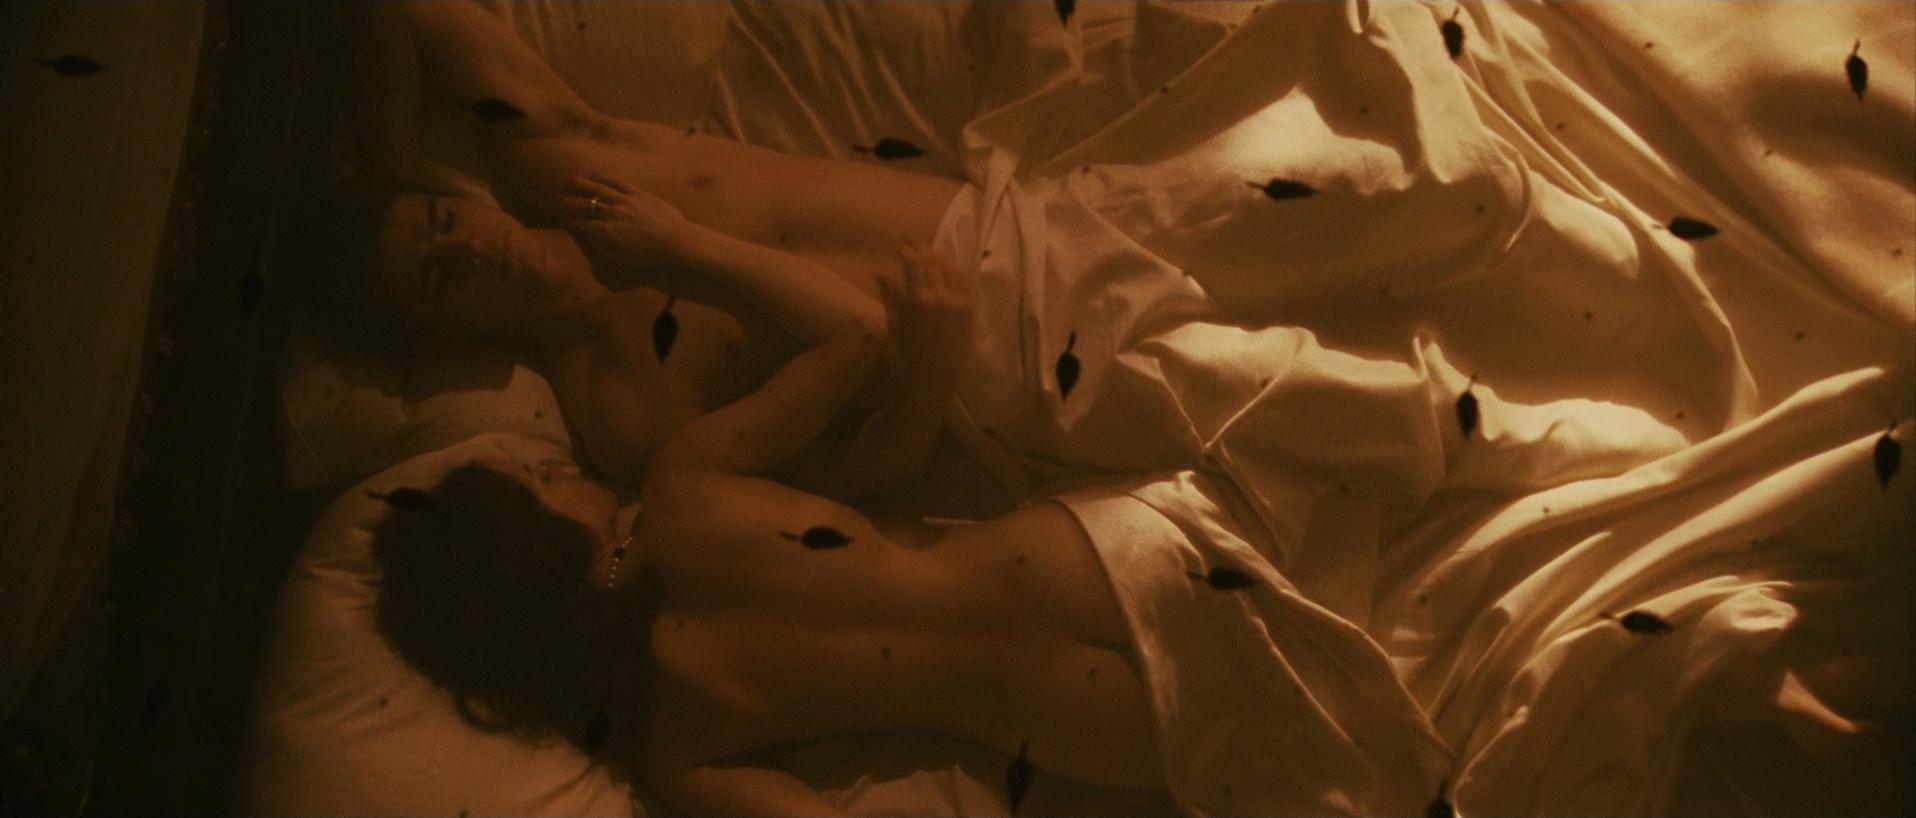 Nude Video Celebs Hilary Swank Nude The Black Dahlia 2006 5005